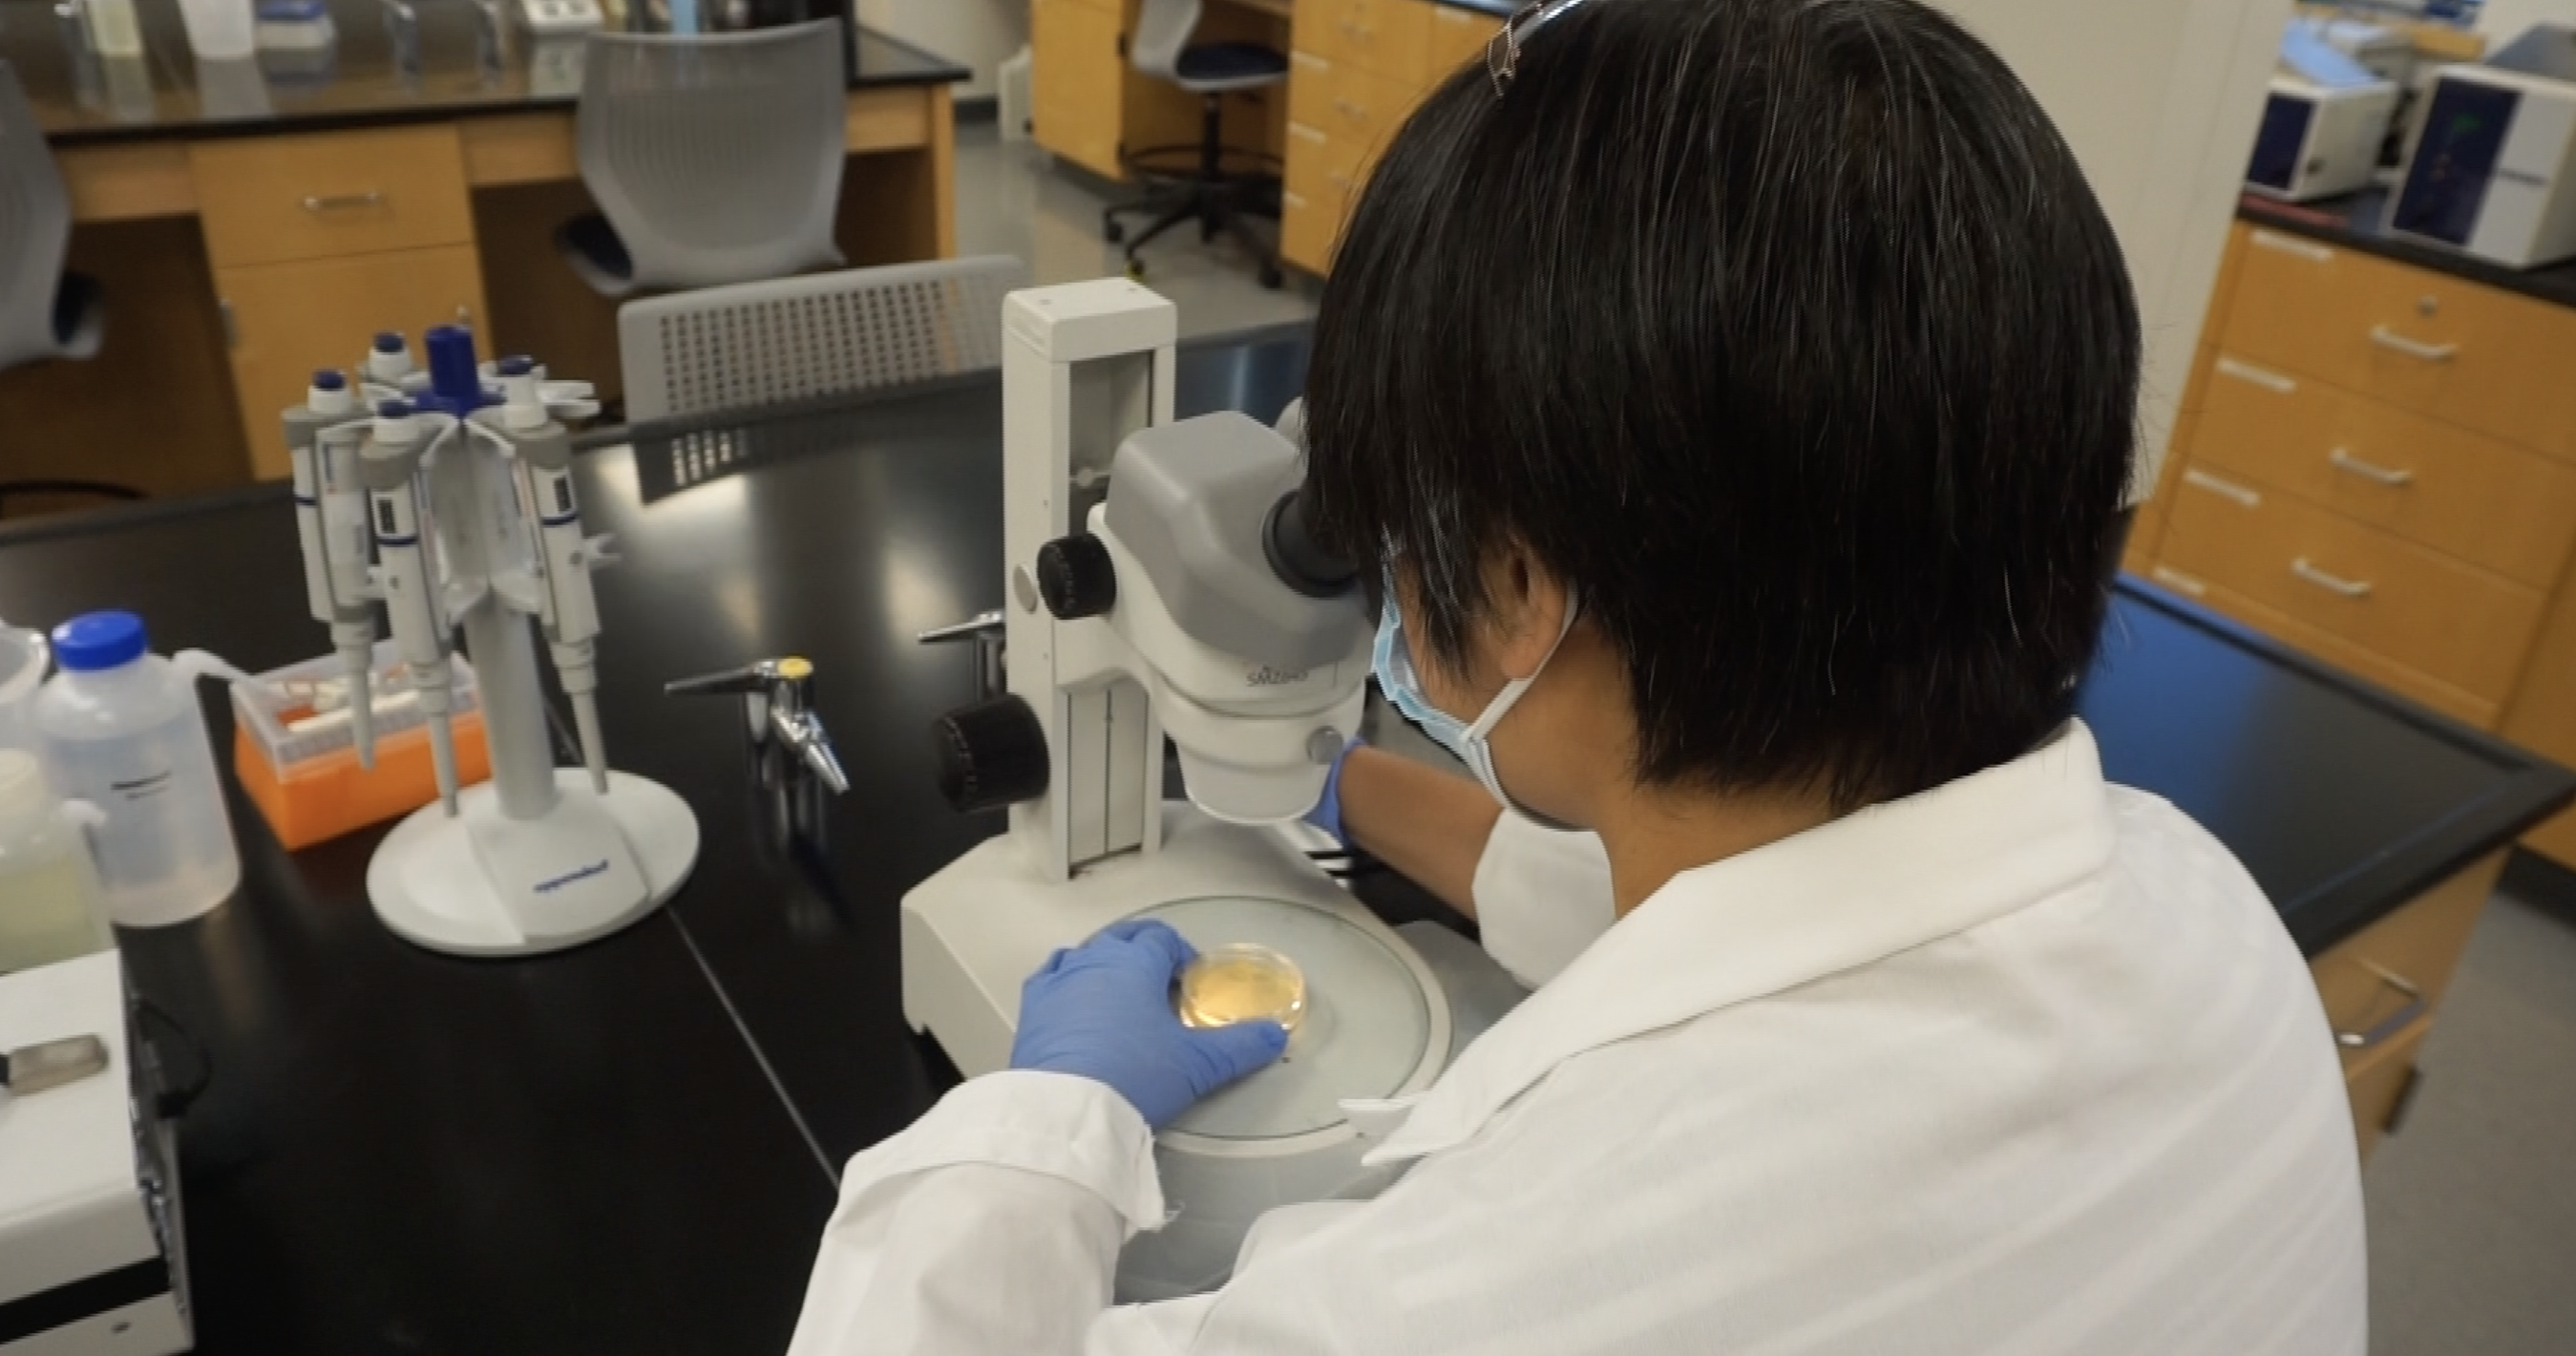 Chemistry professor looks into a microscope to examine petri dish